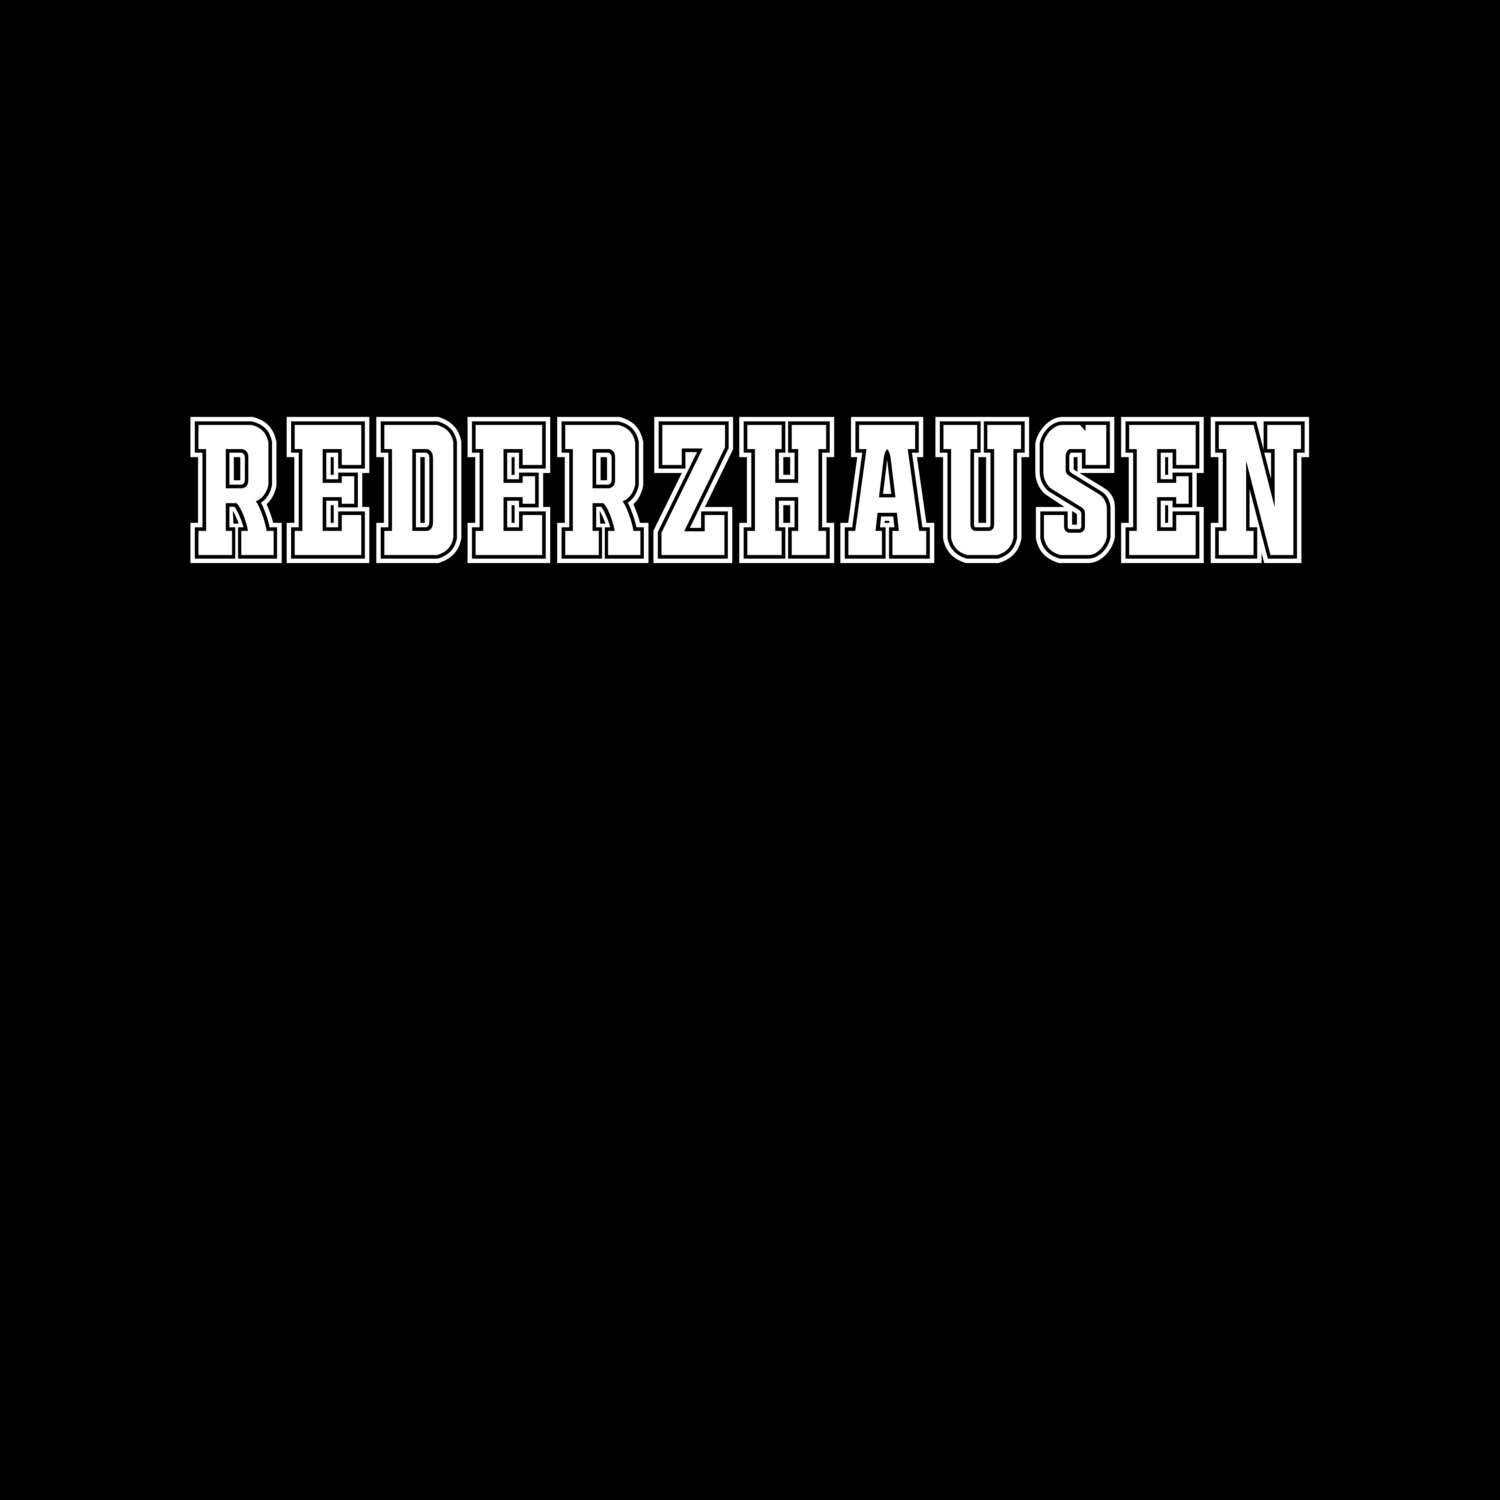 Rederzhausen T-Shirt »Classic«